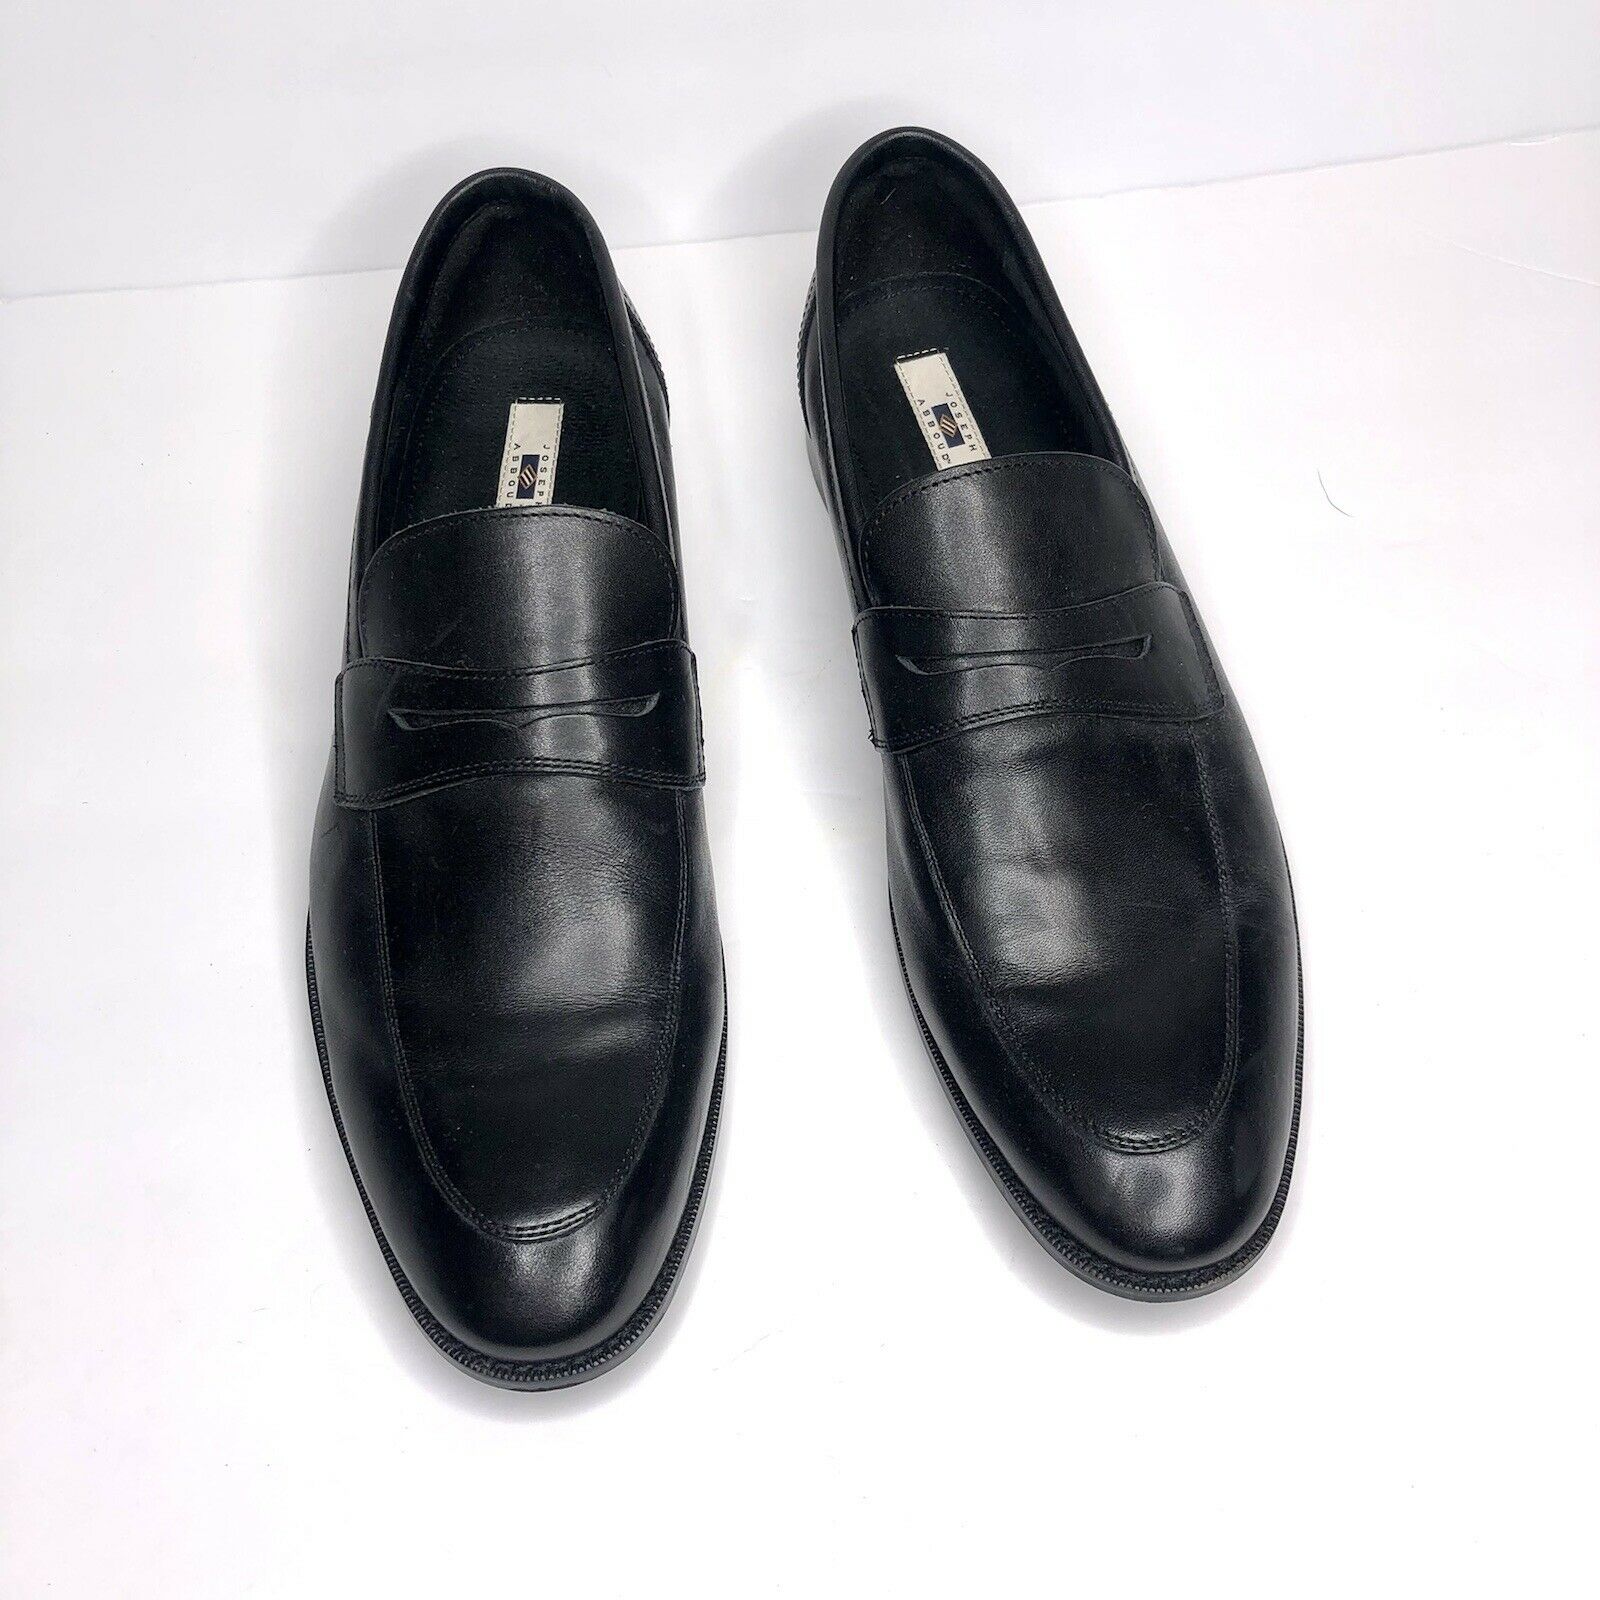 Joseph Abboud Mens Leather Loafer Slip on Dress Shoes Round Toe Black Sz 11